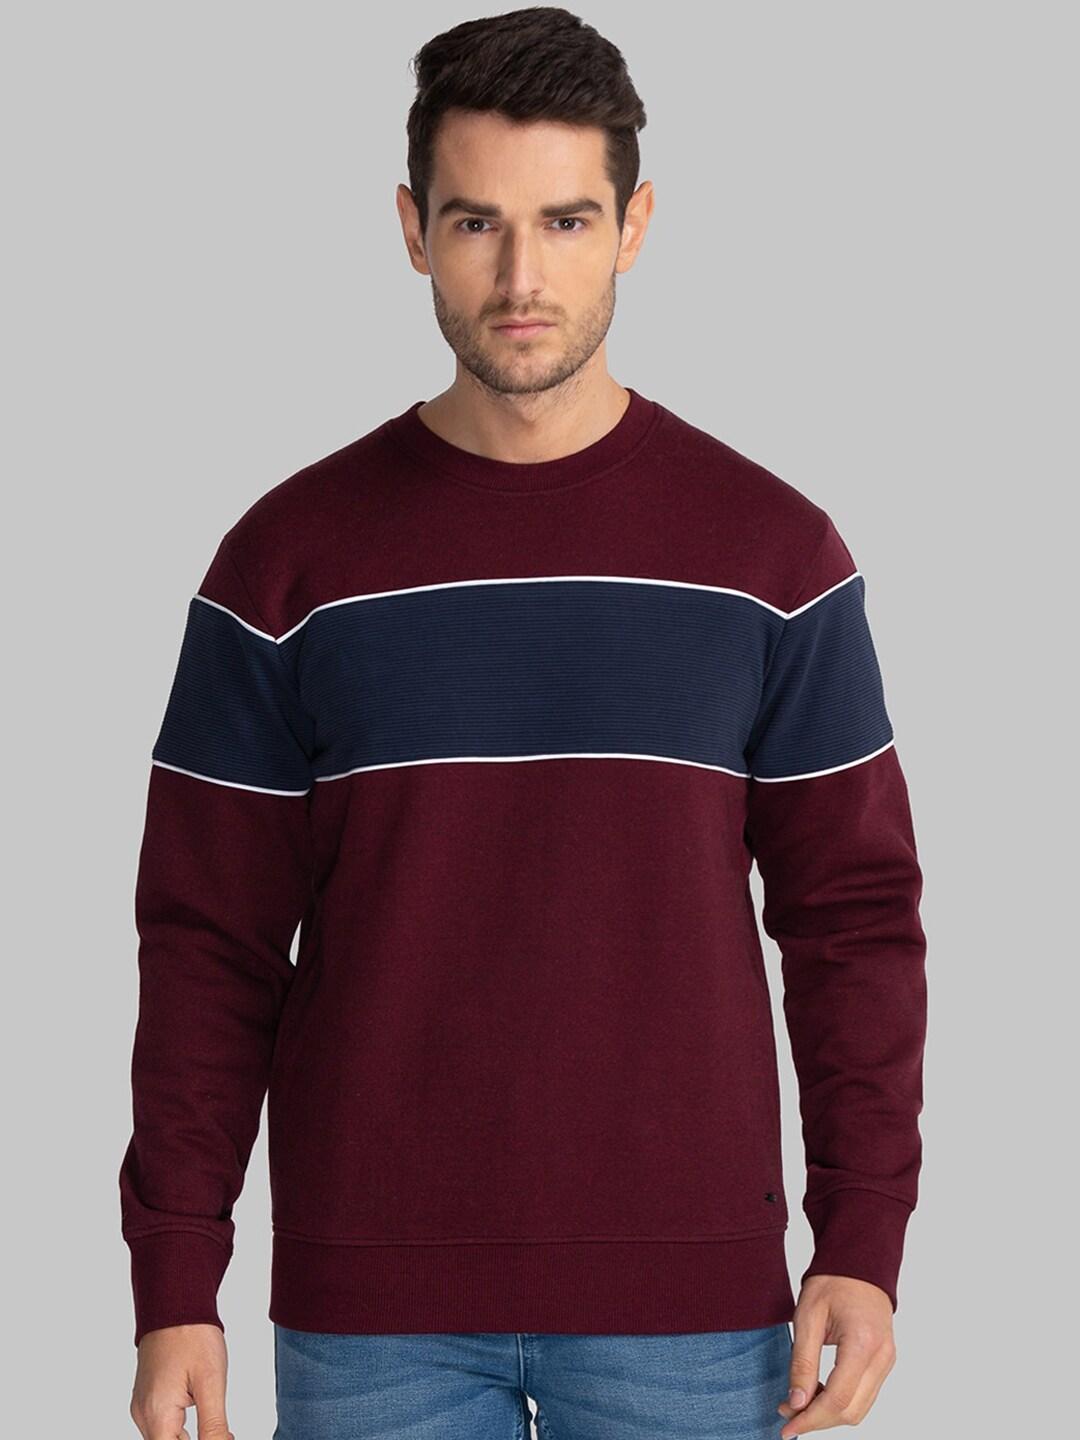 parx-men-maroon-striped-sweatshirt